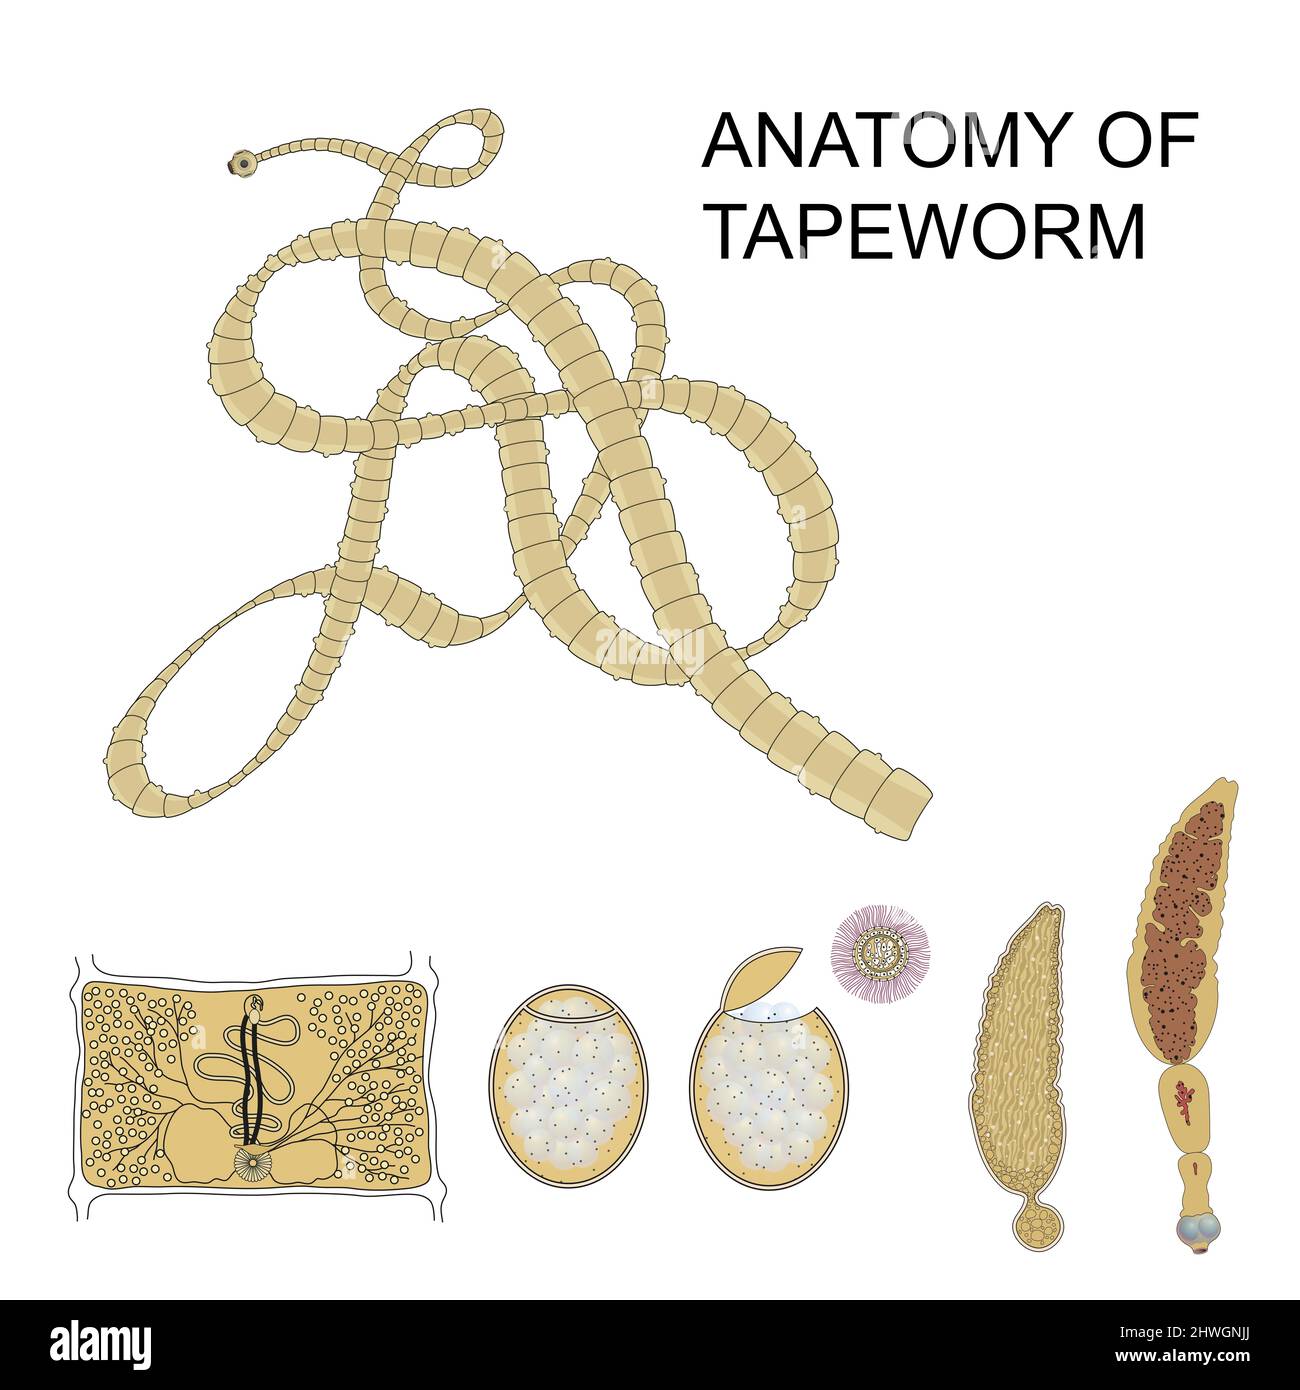 Structure of tapeworm. Illustration on isolated background Stock Photo